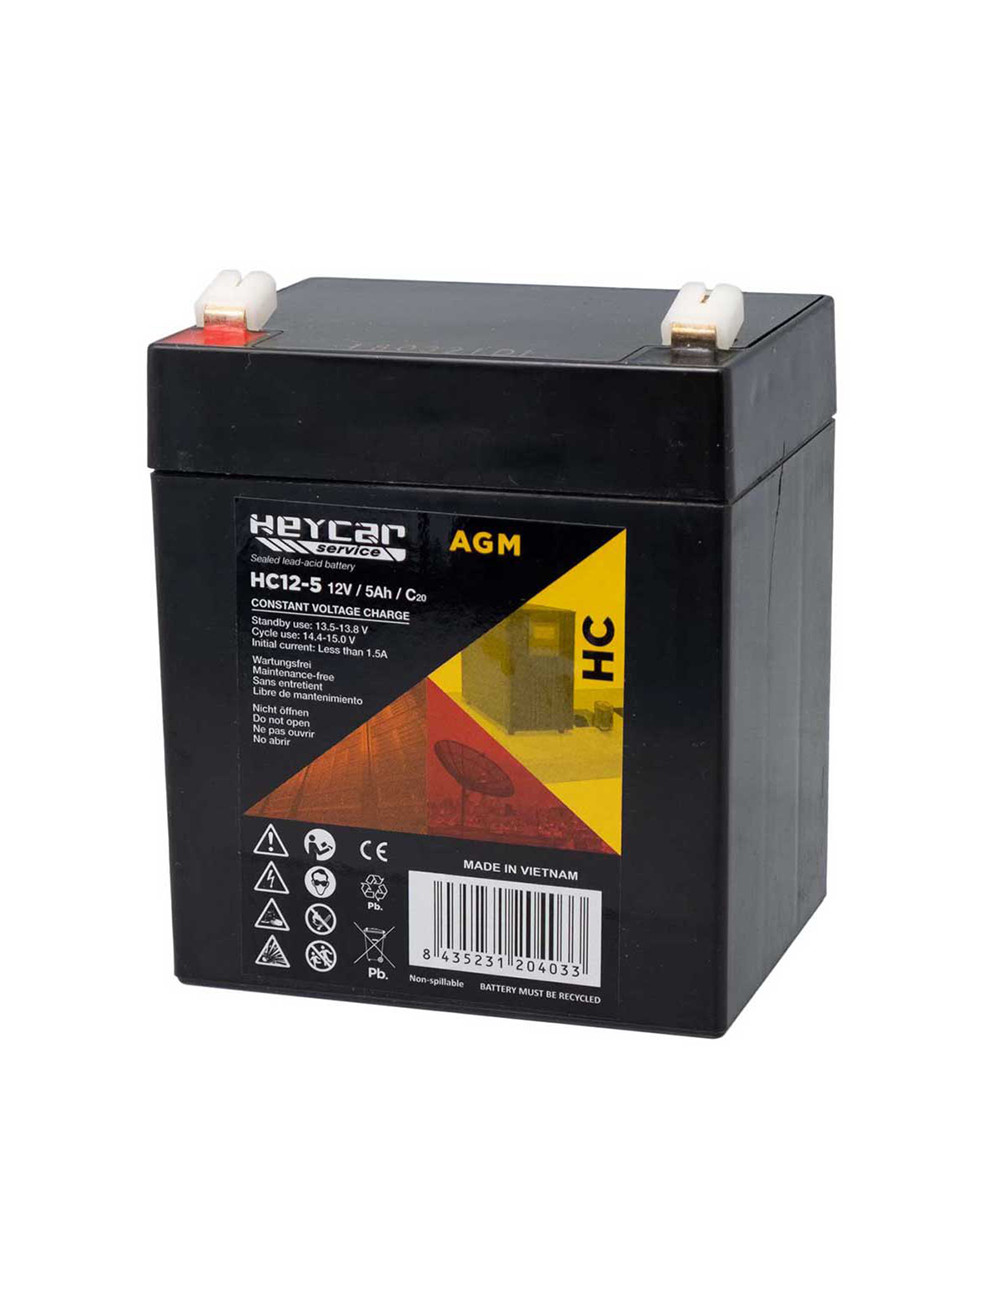 Batería para alarma 12V 5Ah C20 Heycar HC12-5 - HC12-5 -  - 8435231204033 - 1